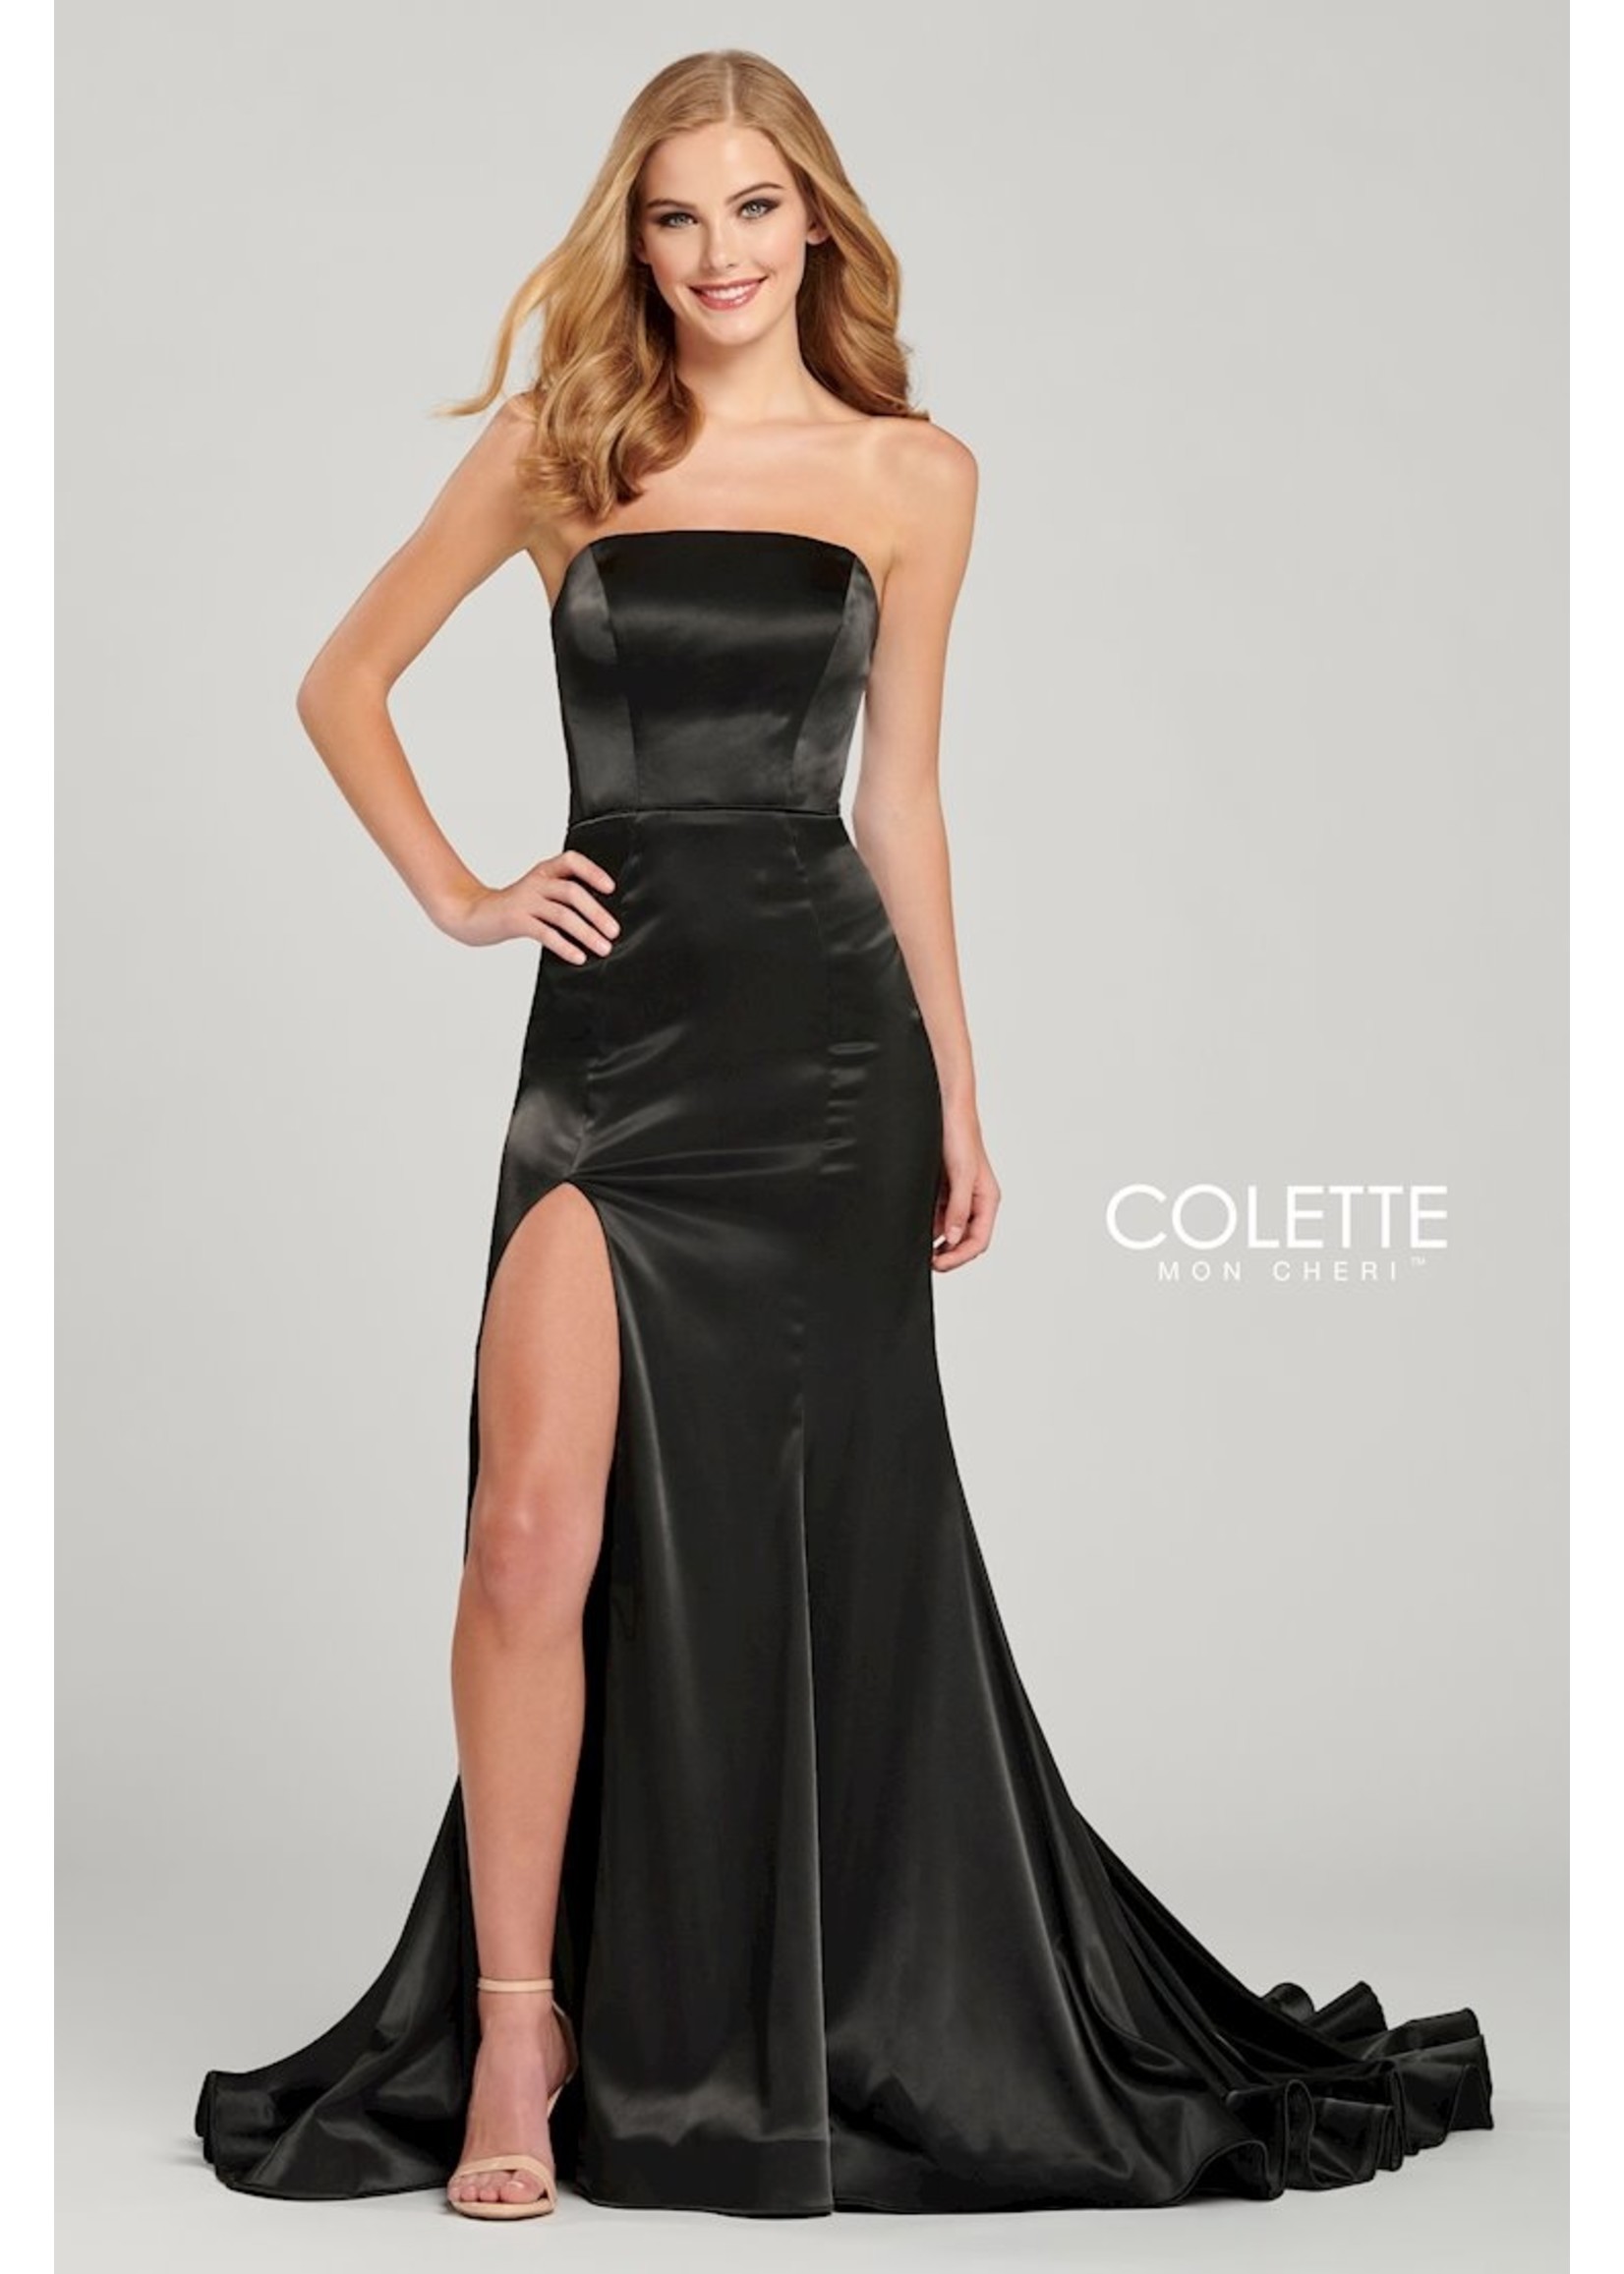 Colette CL12049 Black Satin Strapless Gown